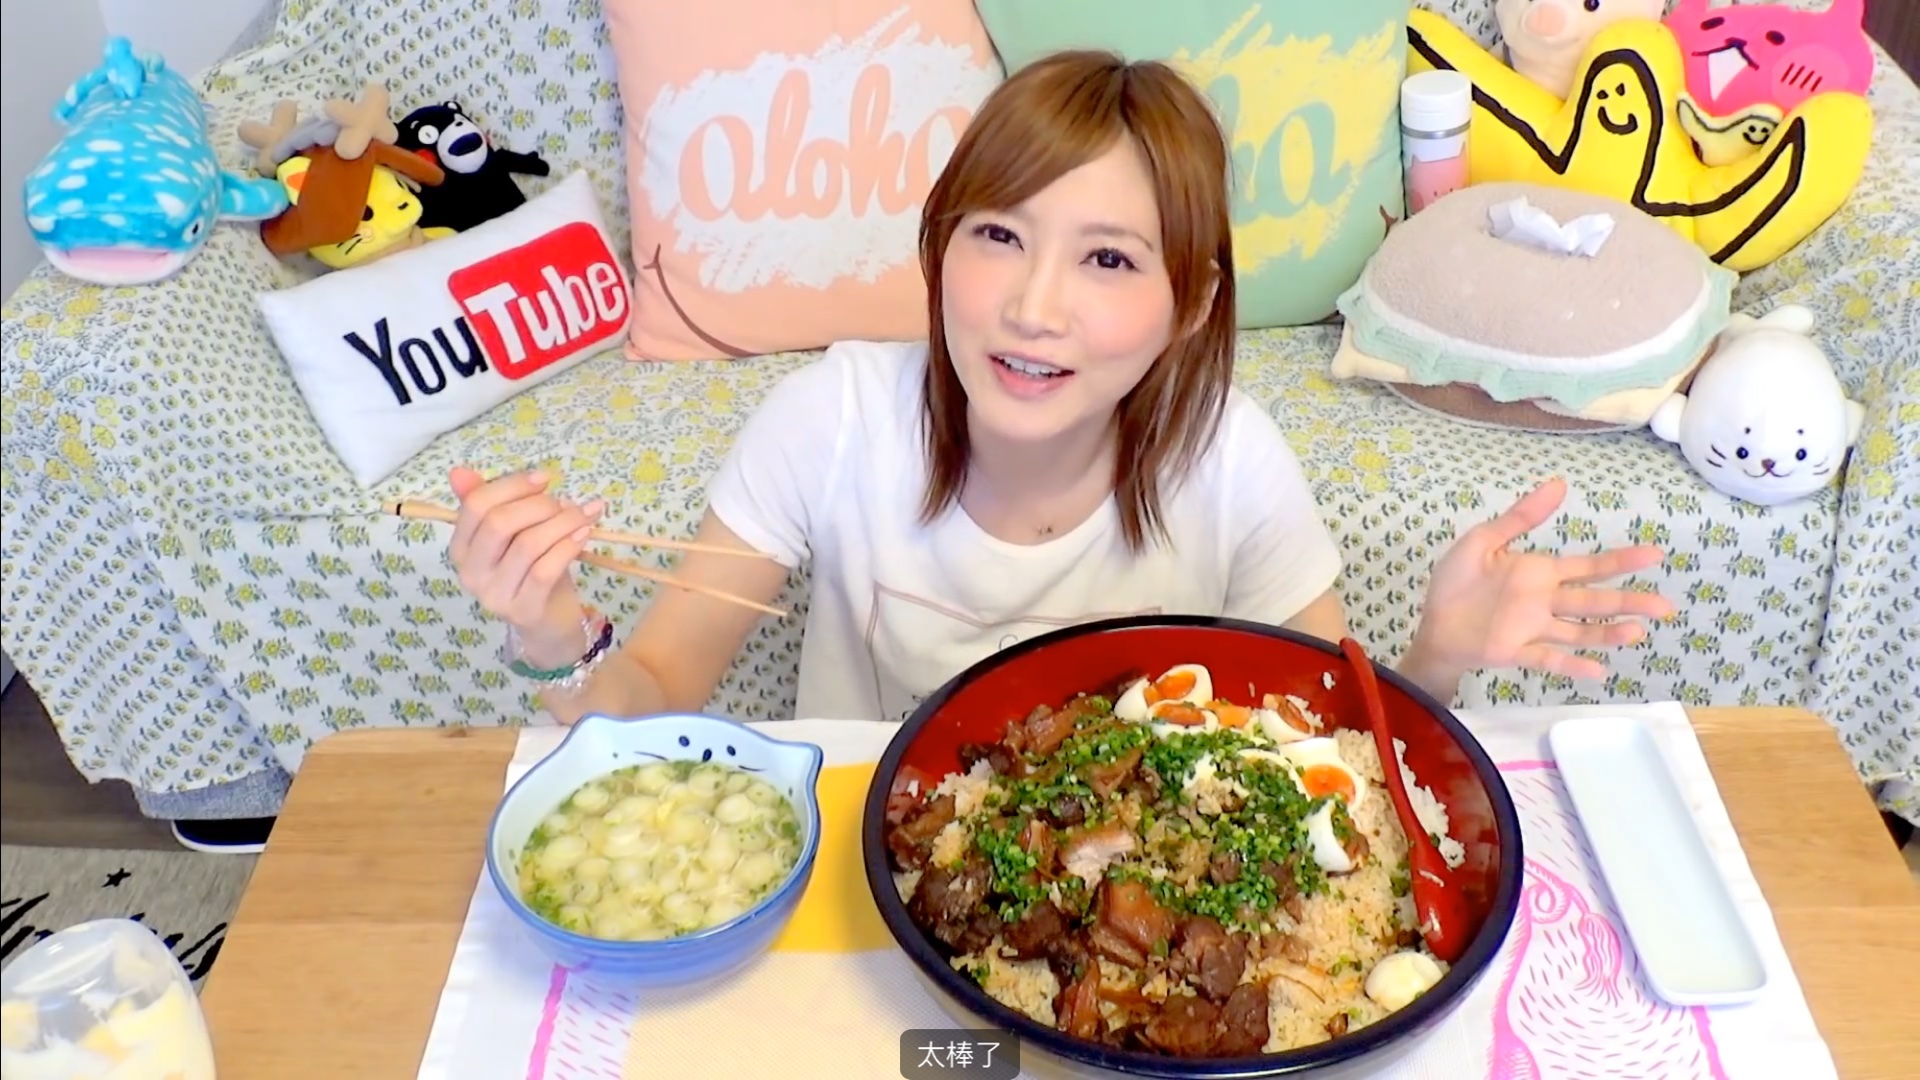 木下妹子的日式焢肉饭——"豚の角煮丼"